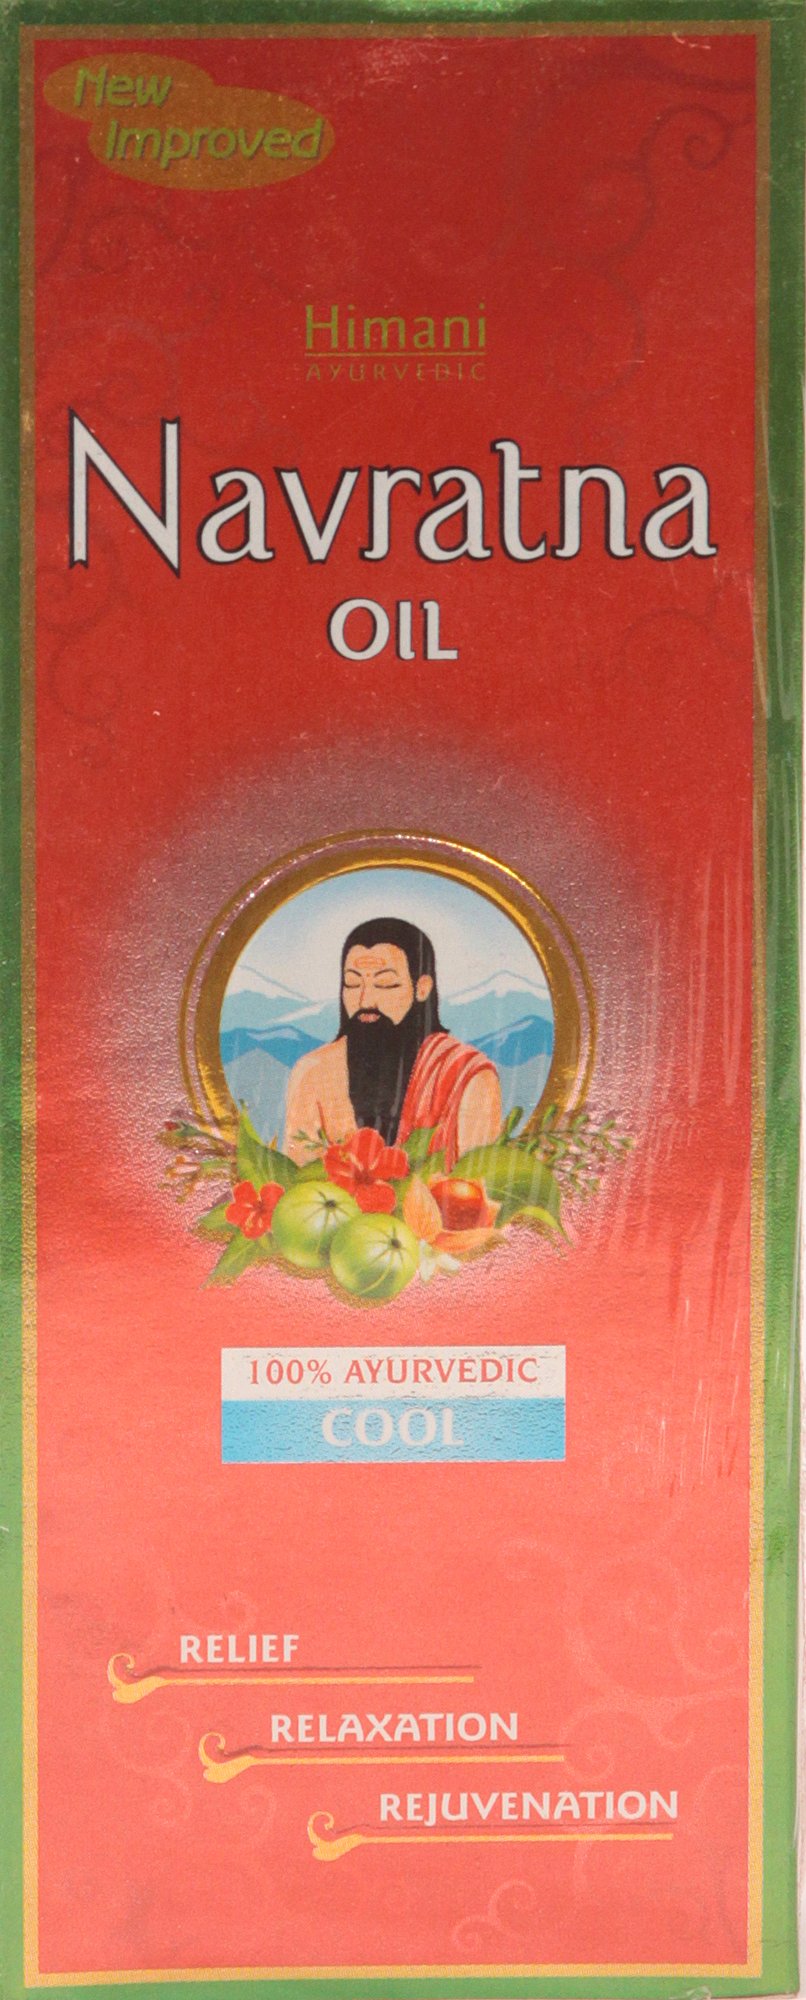 Navratna Oil - book cover